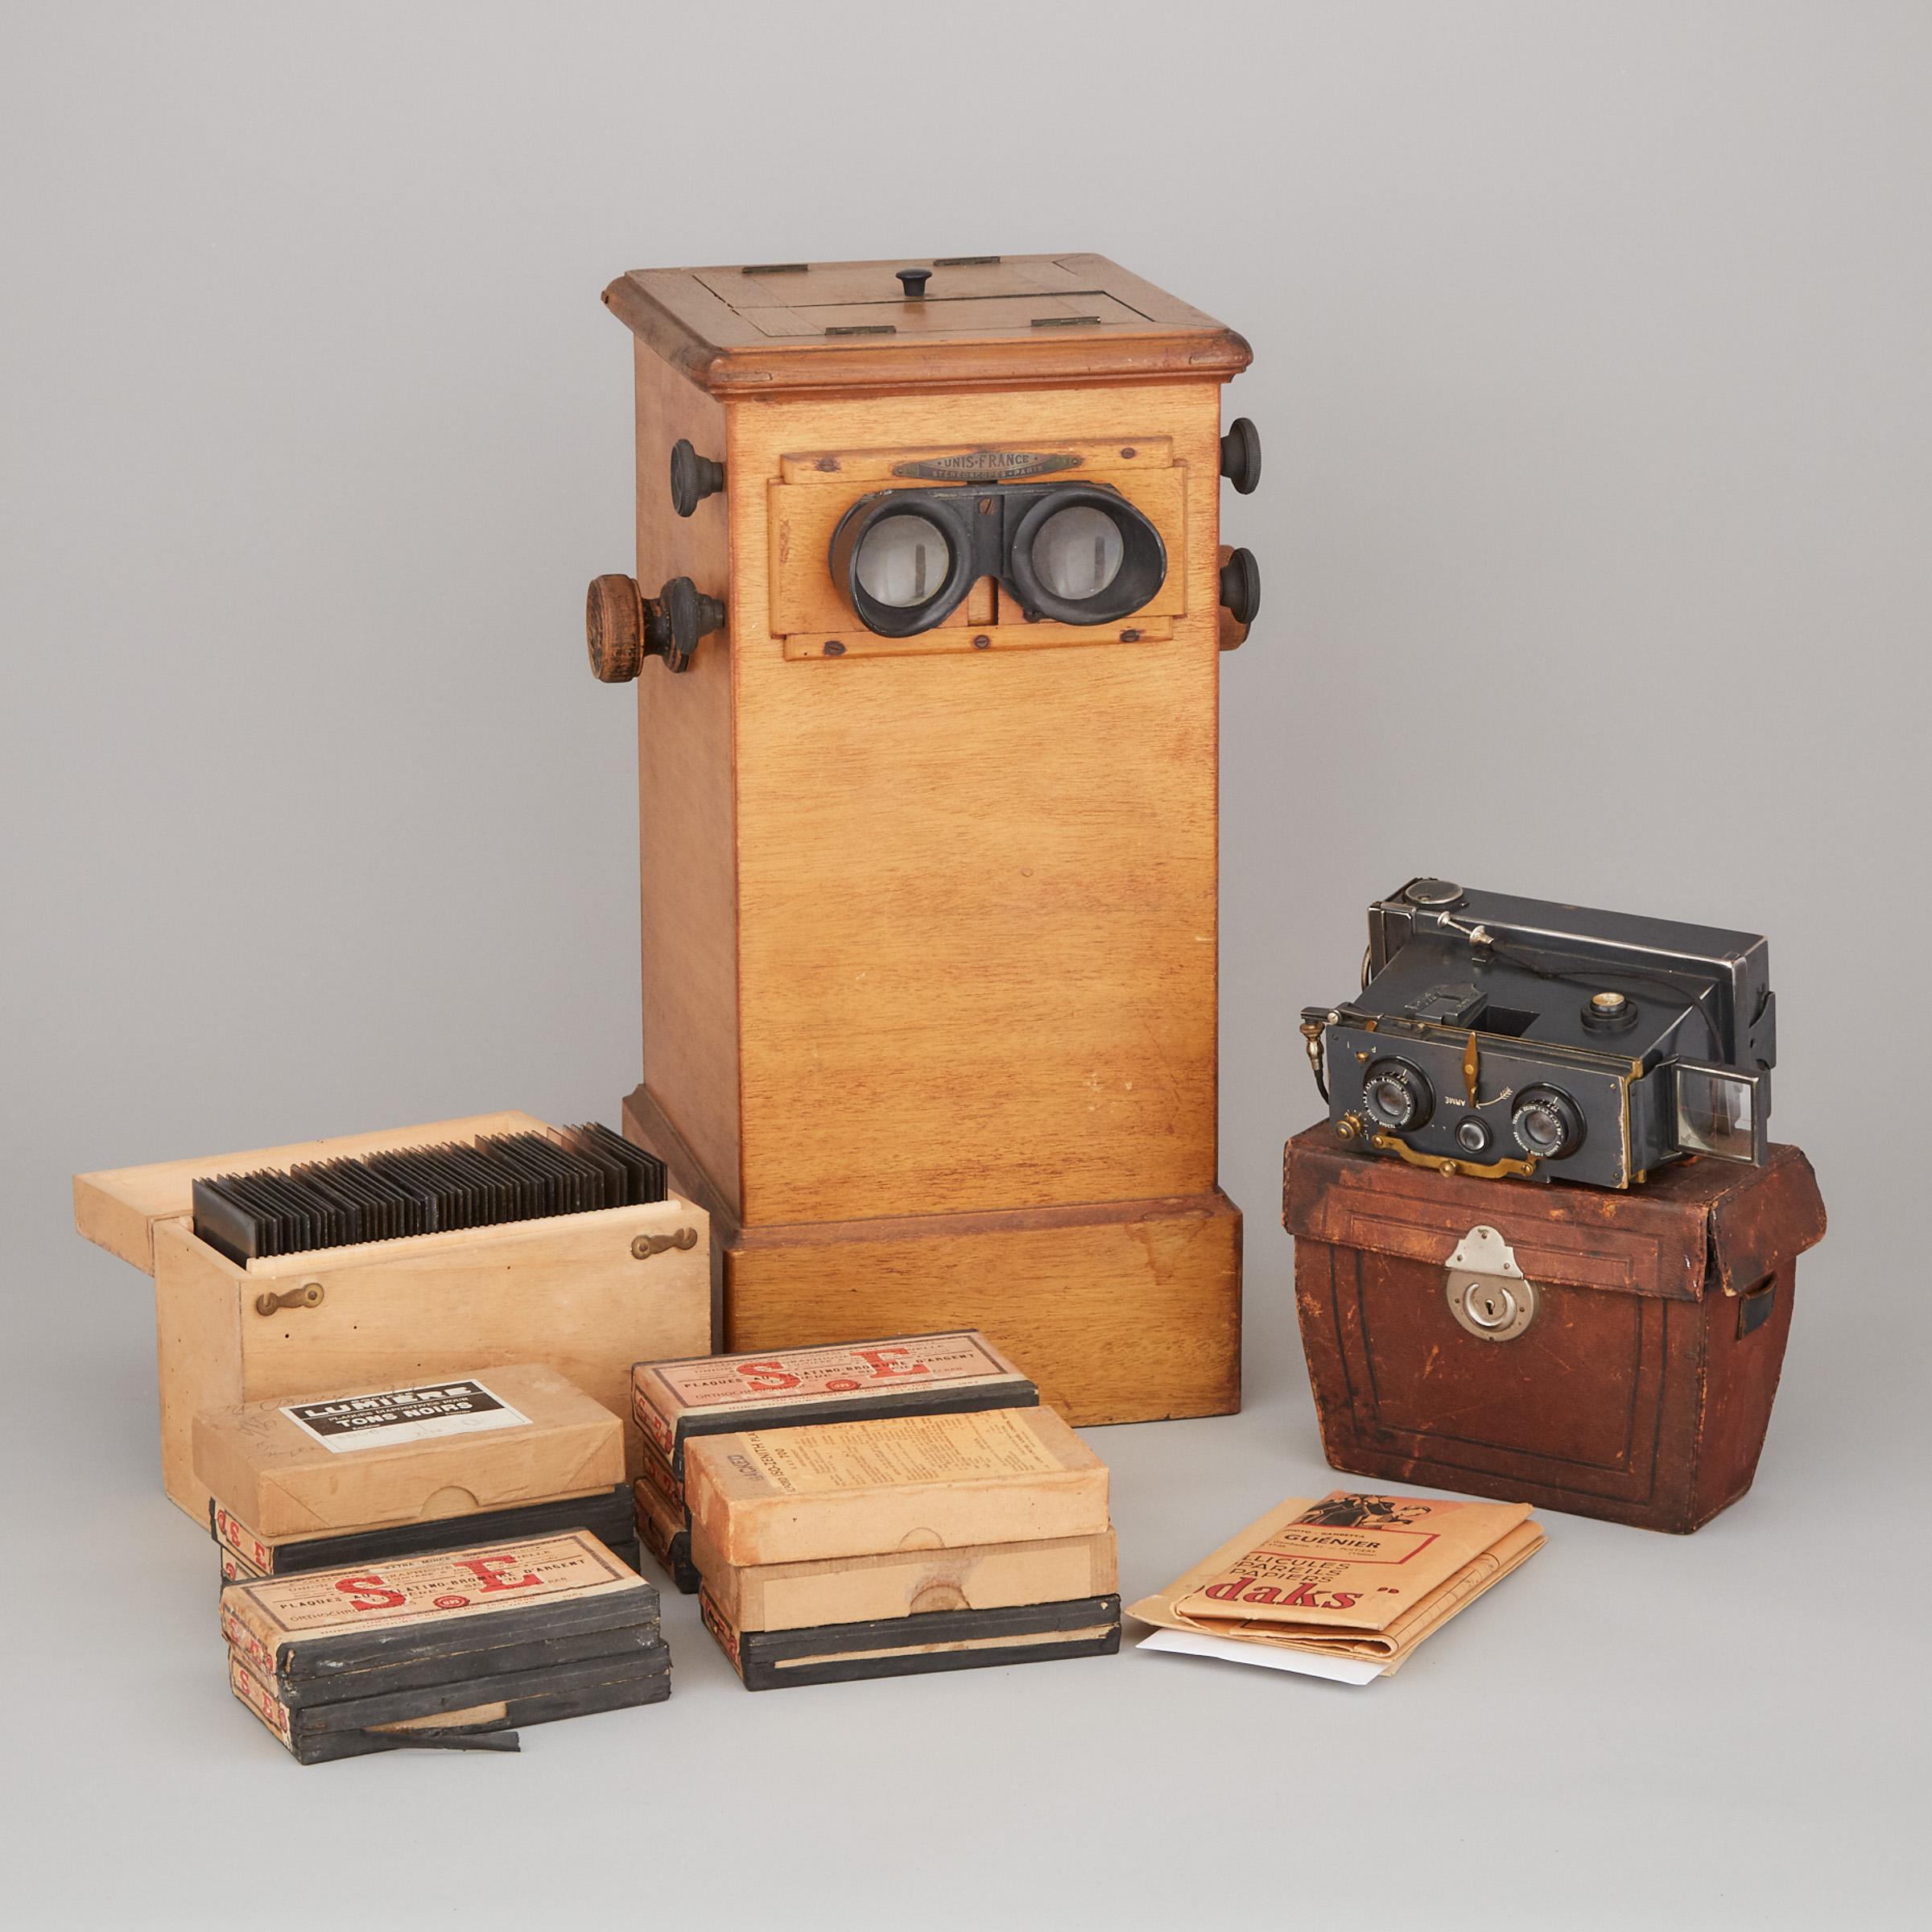 Jules Richard ‘Verascope’ Stereoscopic Camera and ‘Unis’ Stereoscope, c.1910